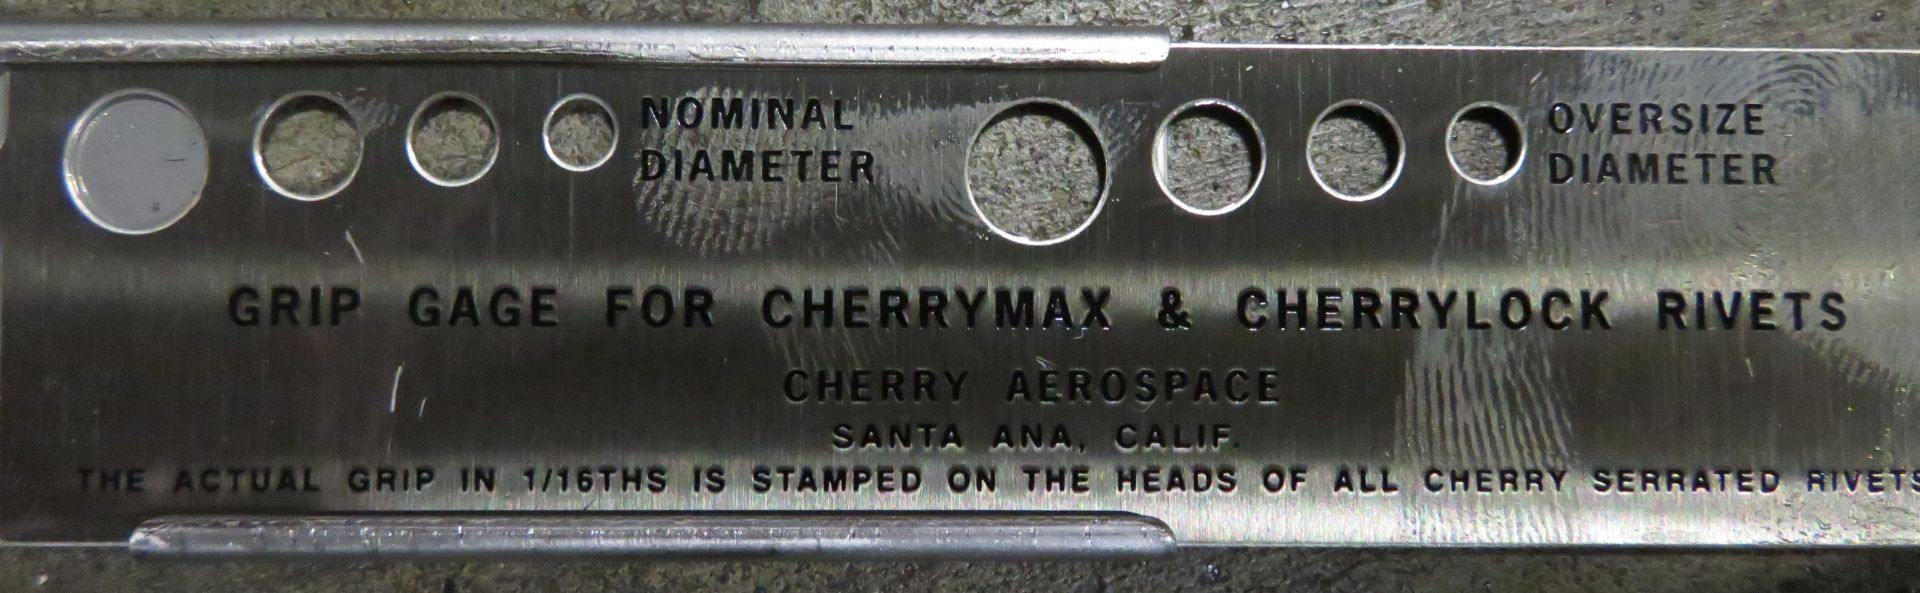 Cherry Aerospace pneumatic rivetter - Image 5 of 6